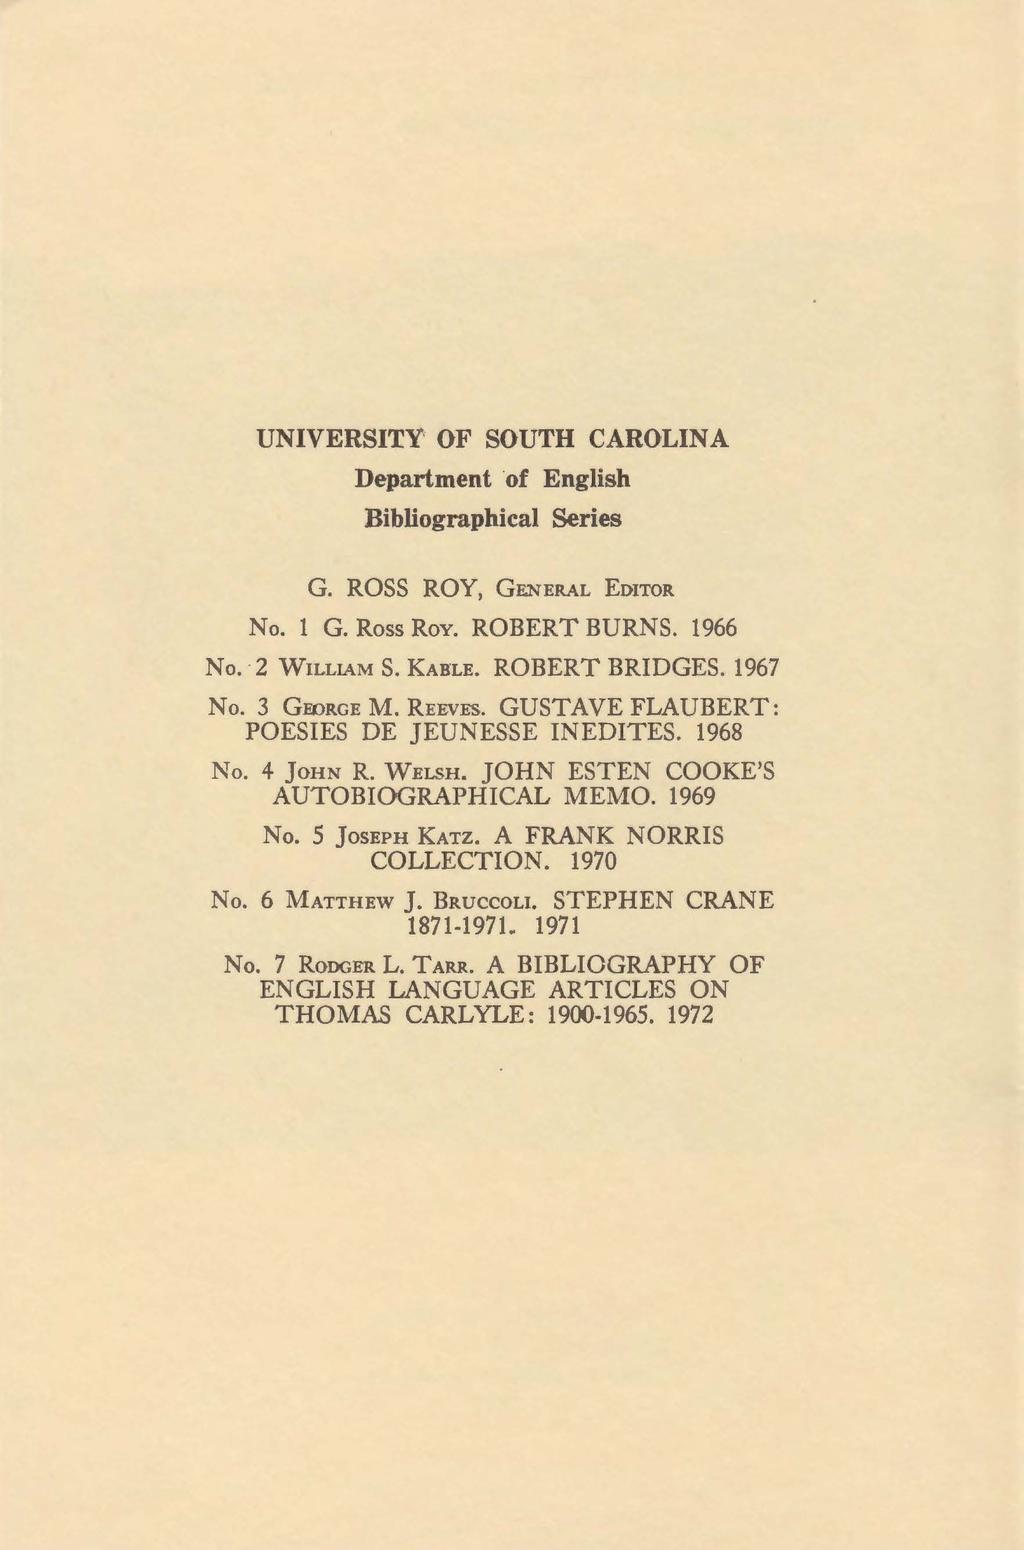 UNIVERSITY' OF SOUTH CAROLINA Department of English Bibliographical Series G. ROSS ROY, GENERAL EDITOR No.1 G. Ross Roy. ROBERT BURNS. 1966 No. -2 WILLIAM S. KABLE. ROBERT BRIDGES. 1967 No.3 GOORGE M.